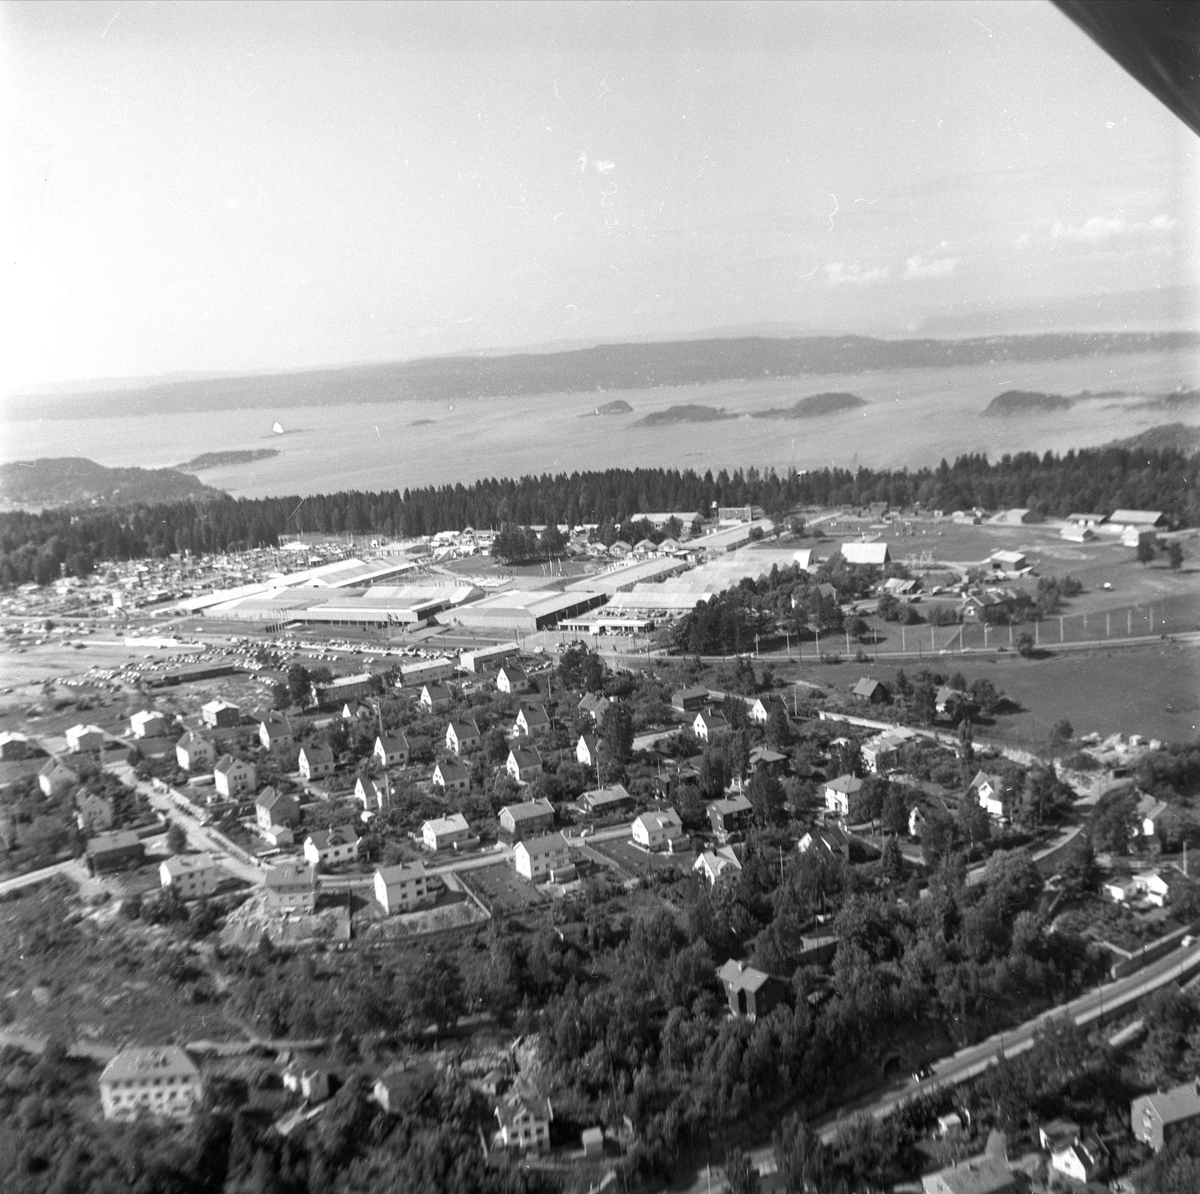 Ekeberg, Oslo, 11. juni 1959, landbruksutstilling, flyfoto over området.